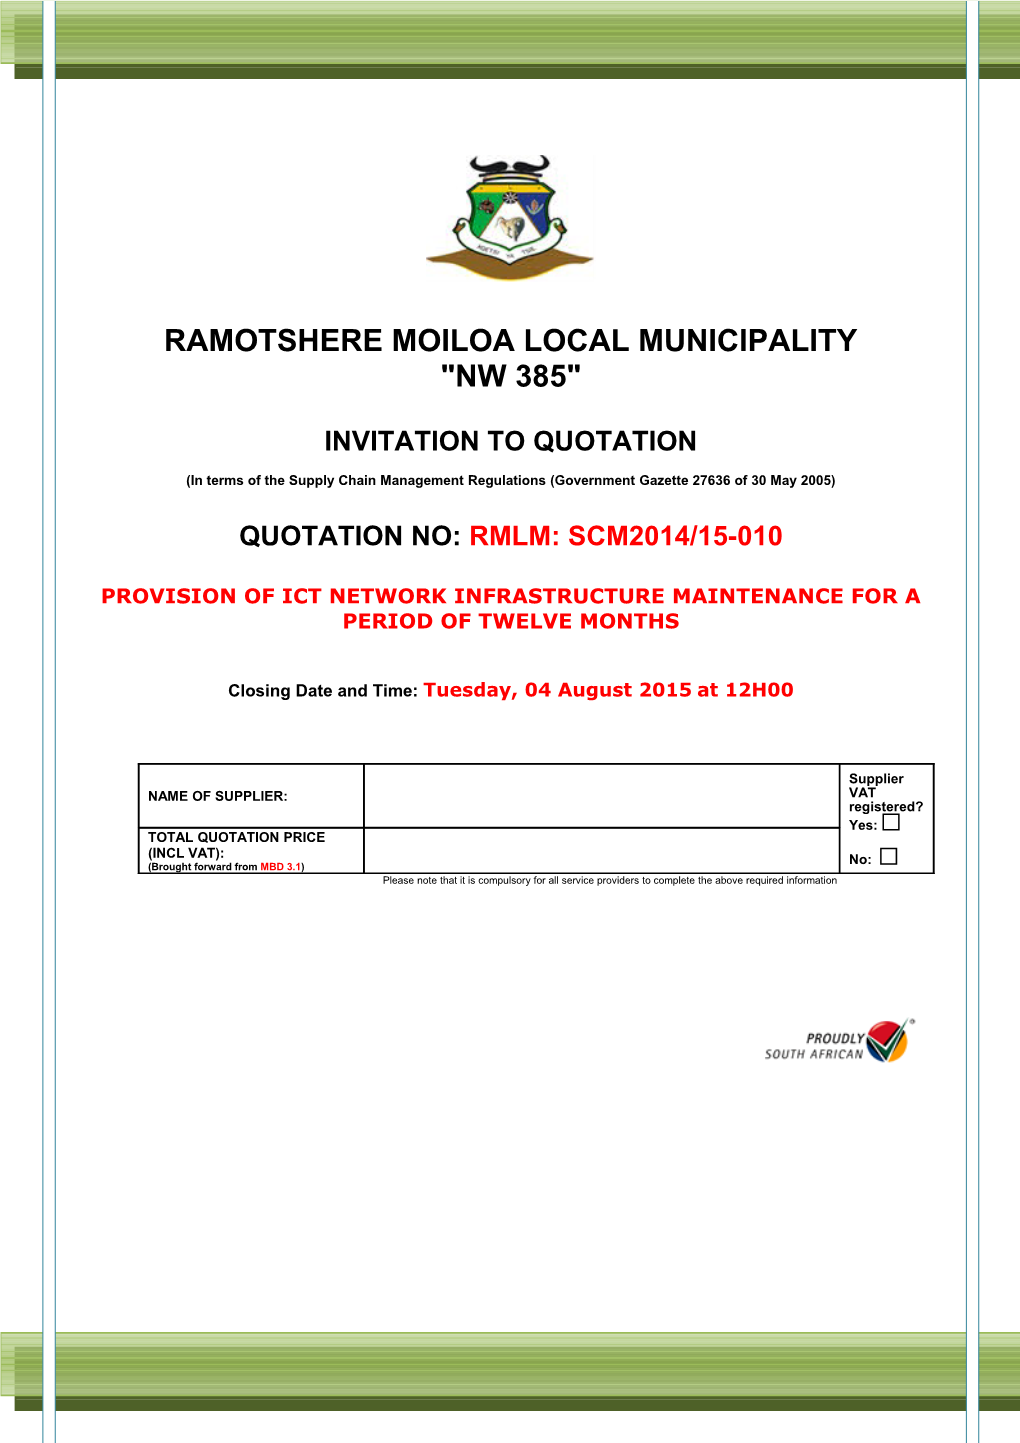 Ramotshere Moiloa Local Municipality